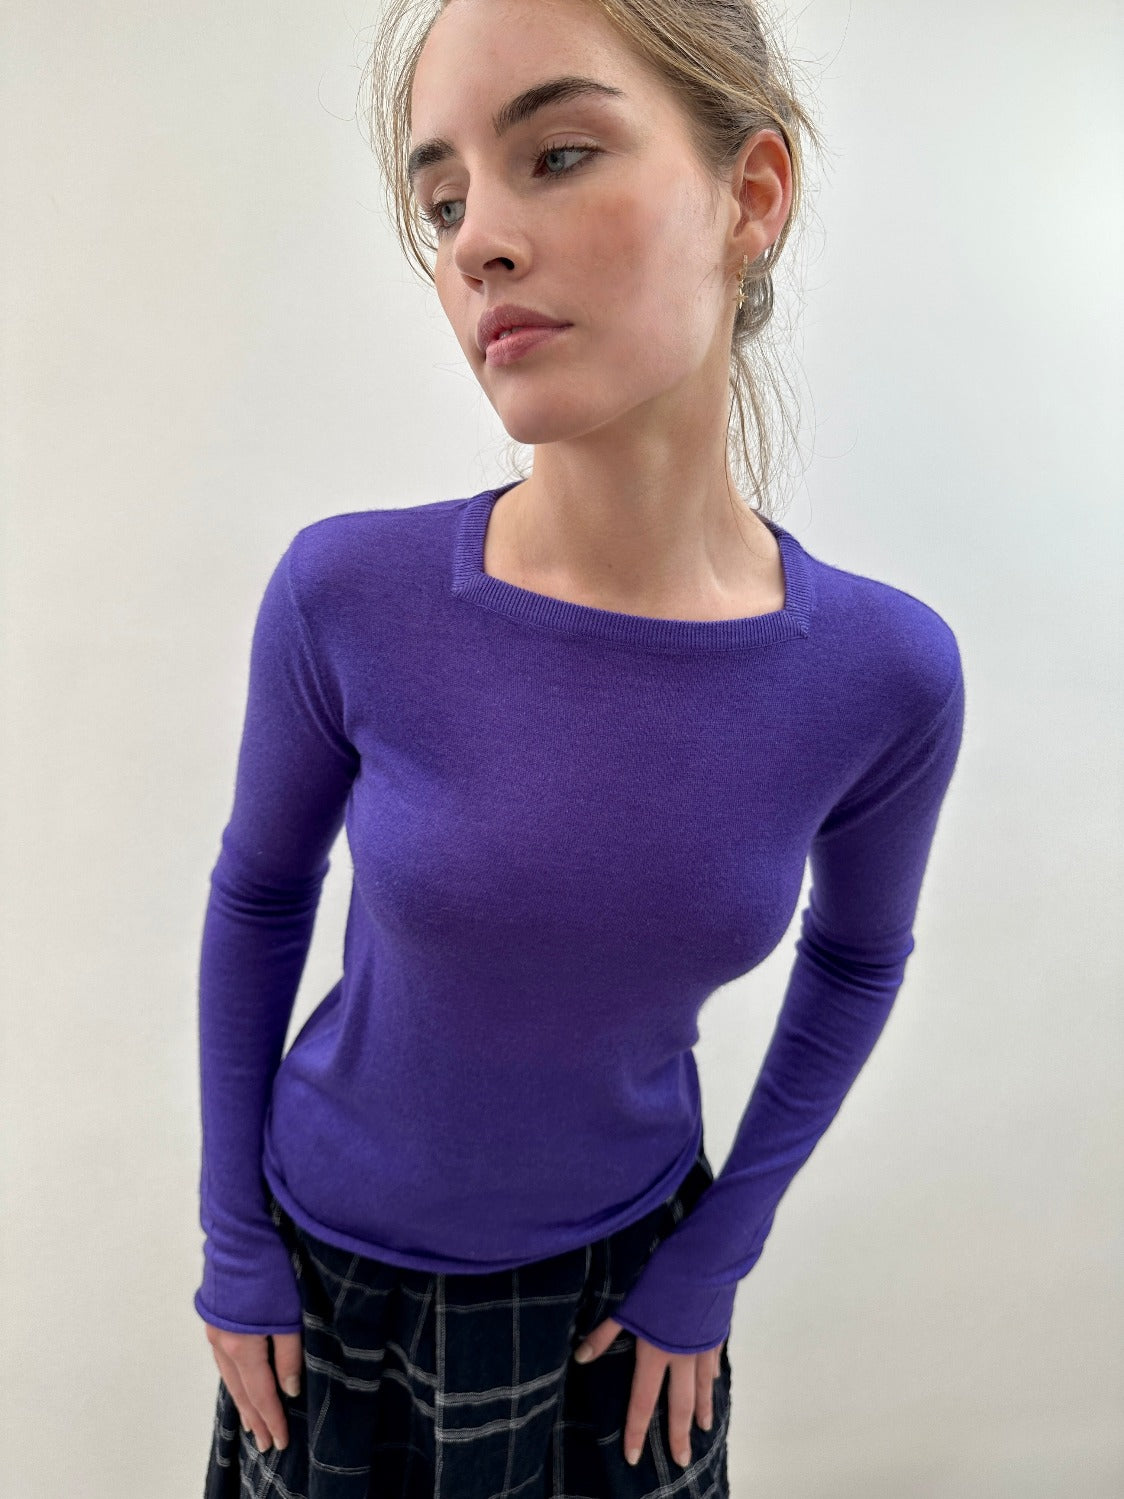 Lassa purple top